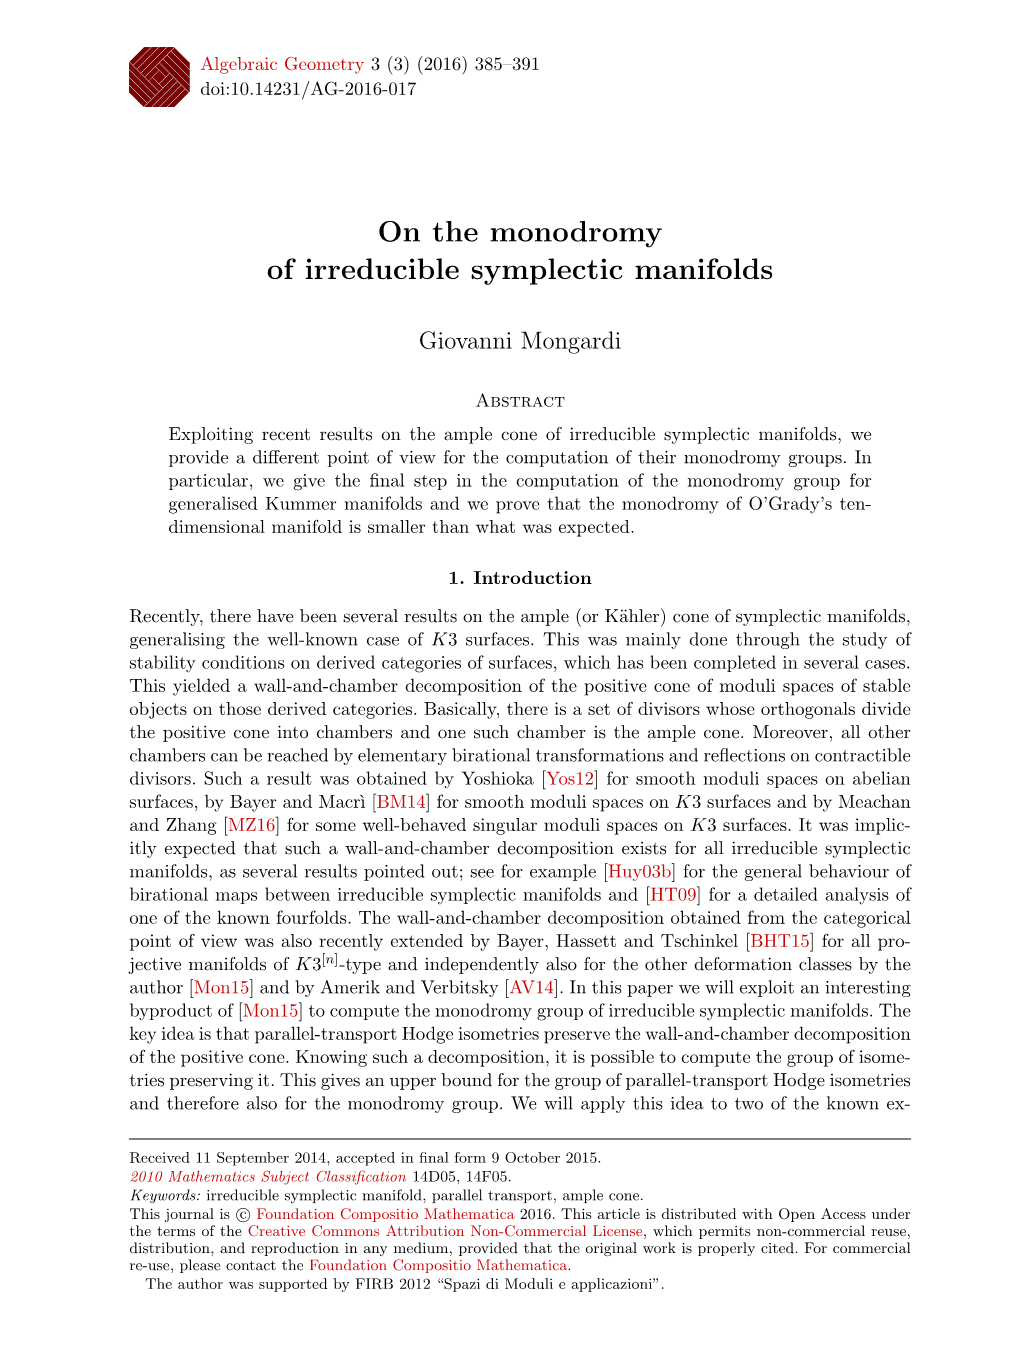 On the Monodromy of Irreducible Symplectic Manifolds